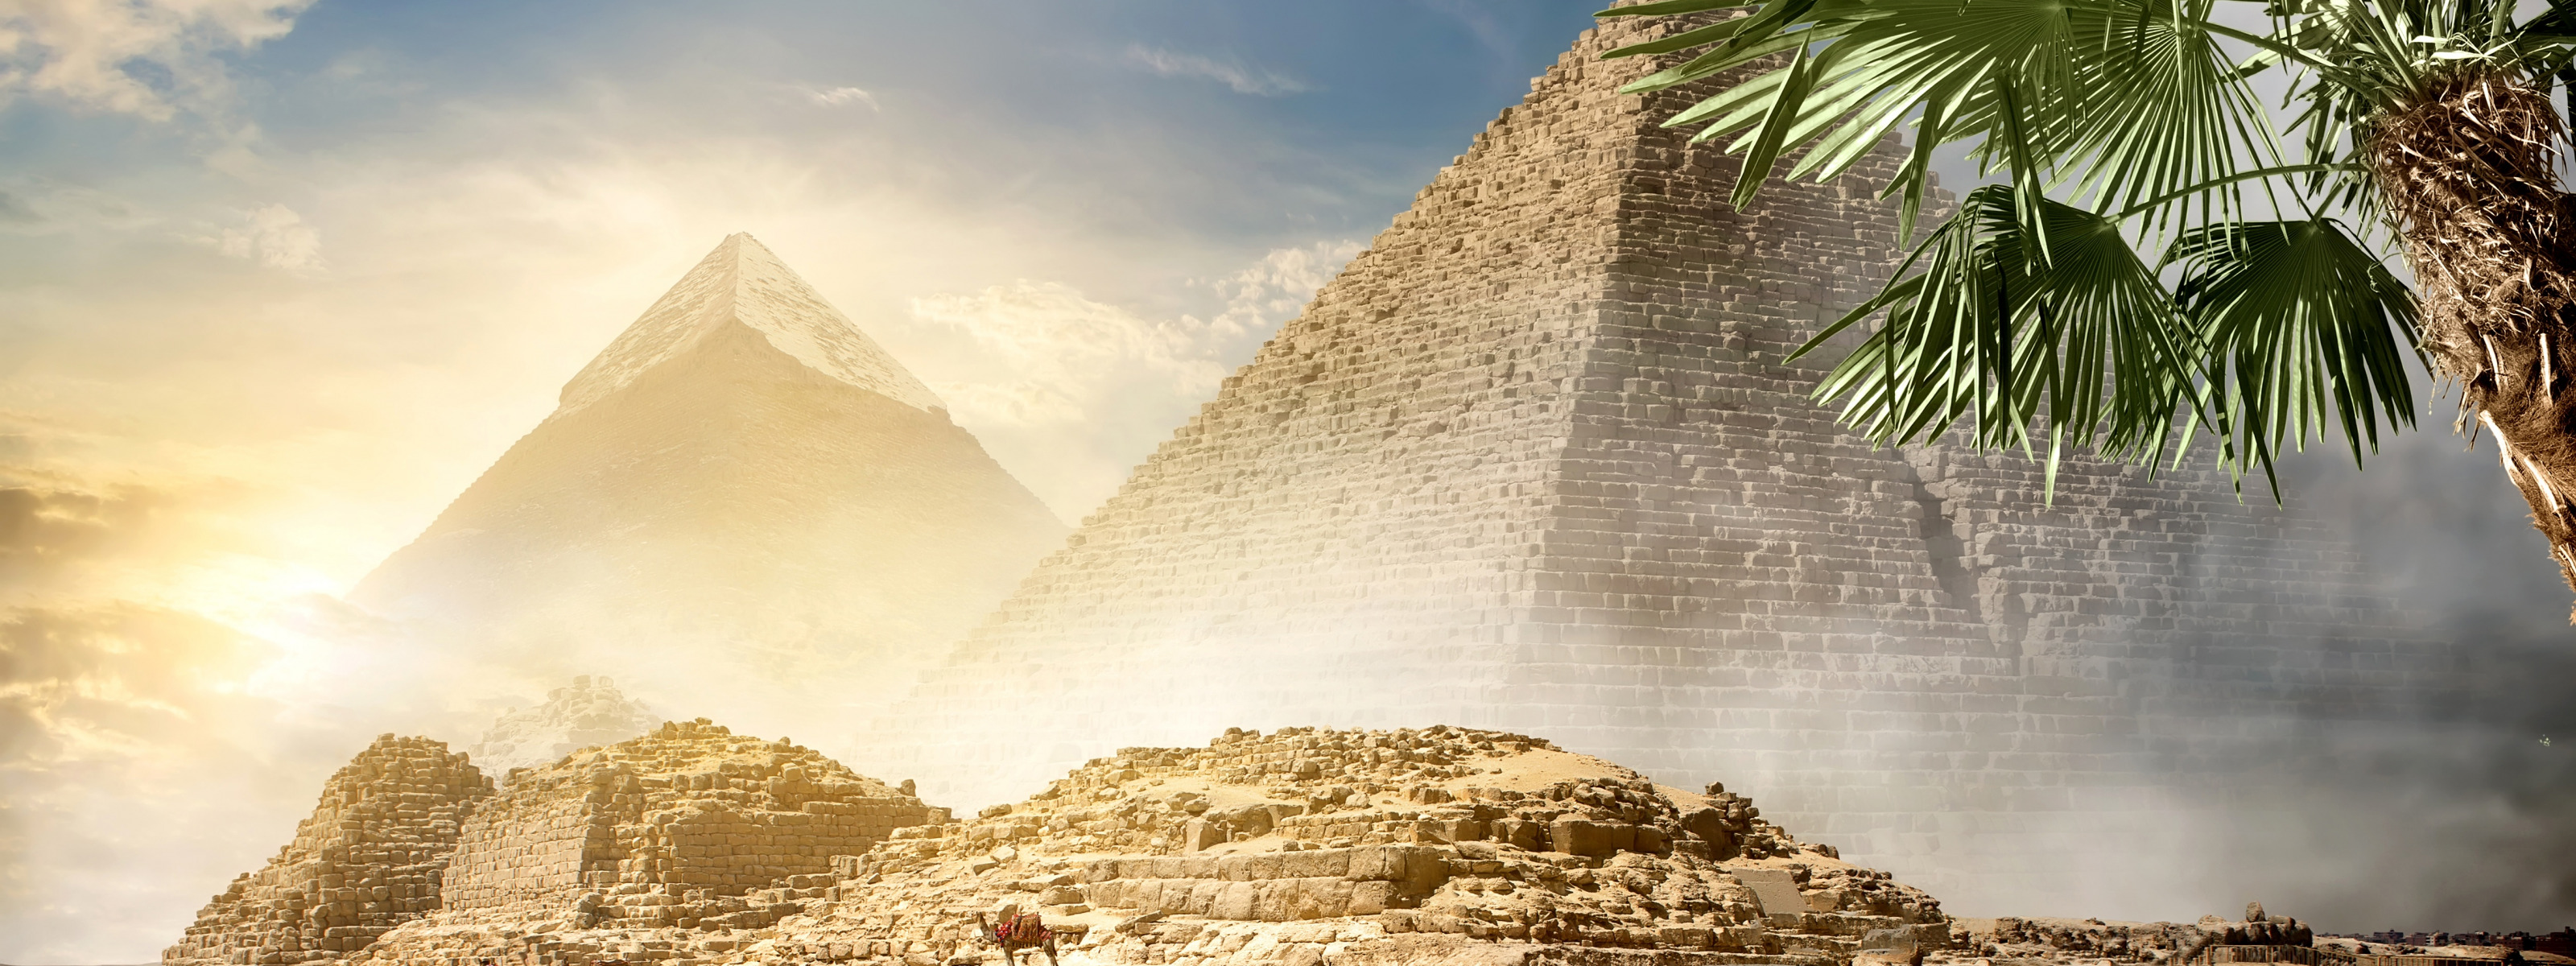 Пирамиды Египта 2021